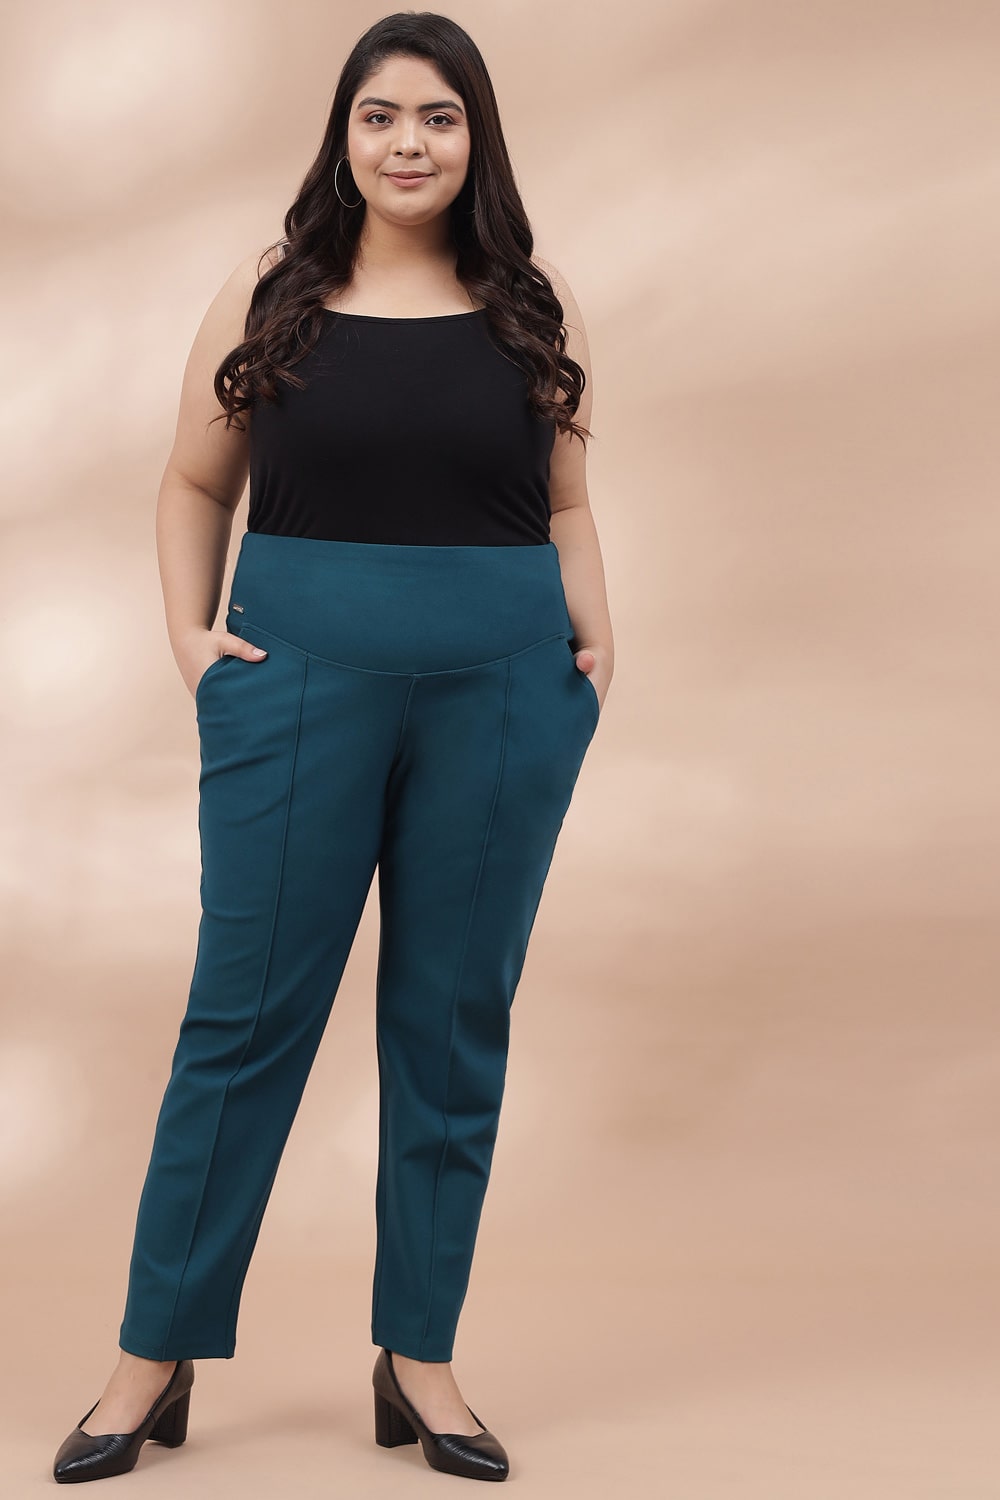 Buy Plus Size Emerald Crease Seam Tummy Tucker Pants Online For Women